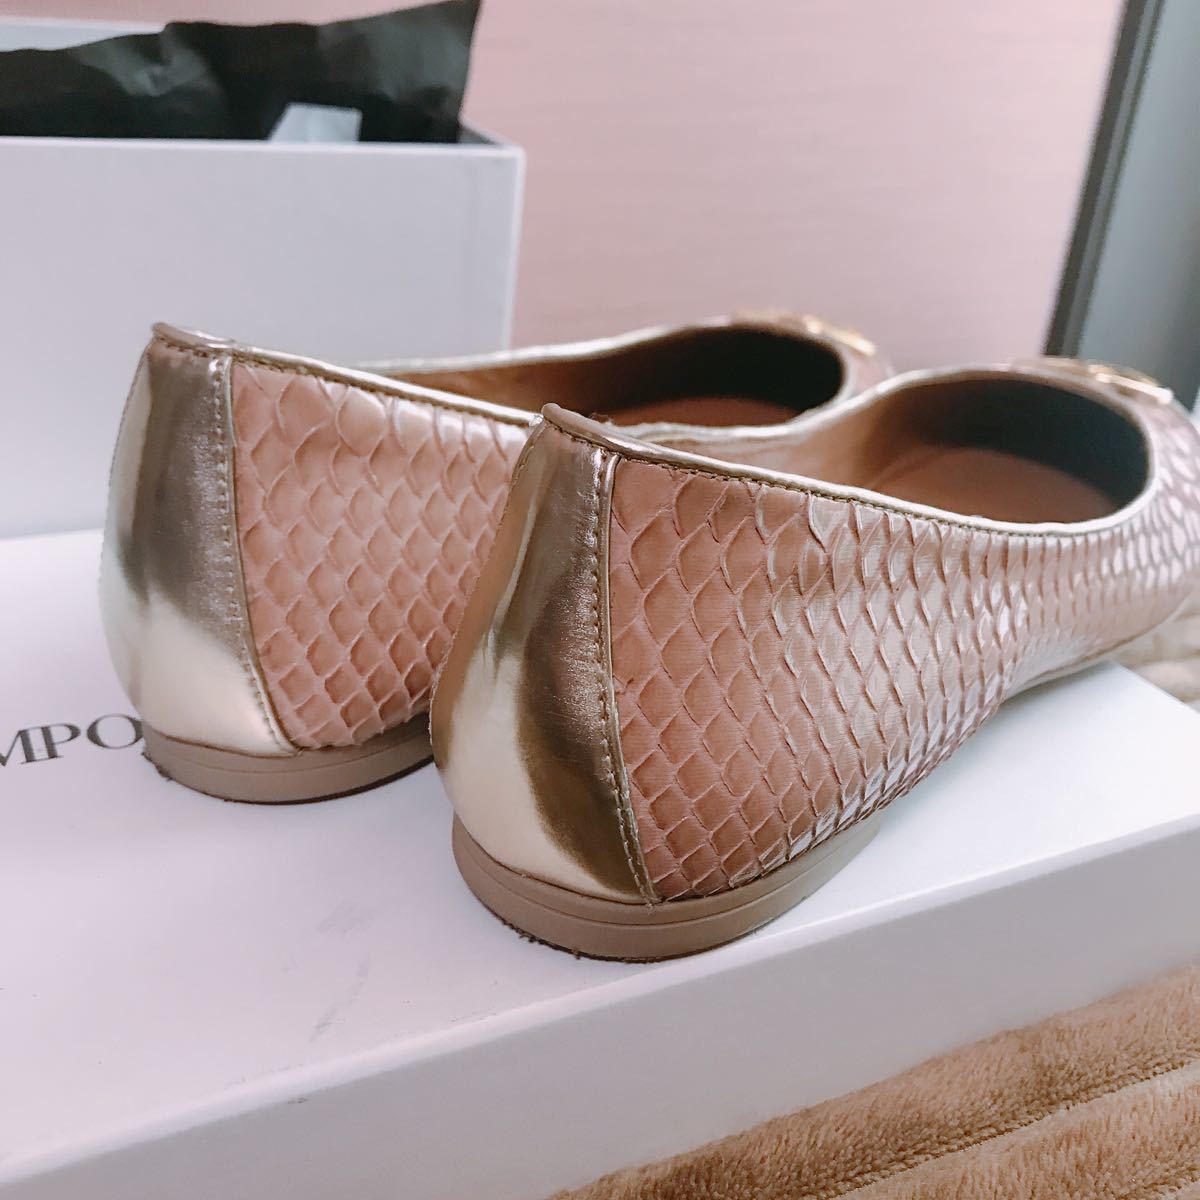  free shipping # beautiful goods * Emporio Armani original leather type pushed . Flat pumps 37 / low heel shoes Christian Louboutin flat shoes 